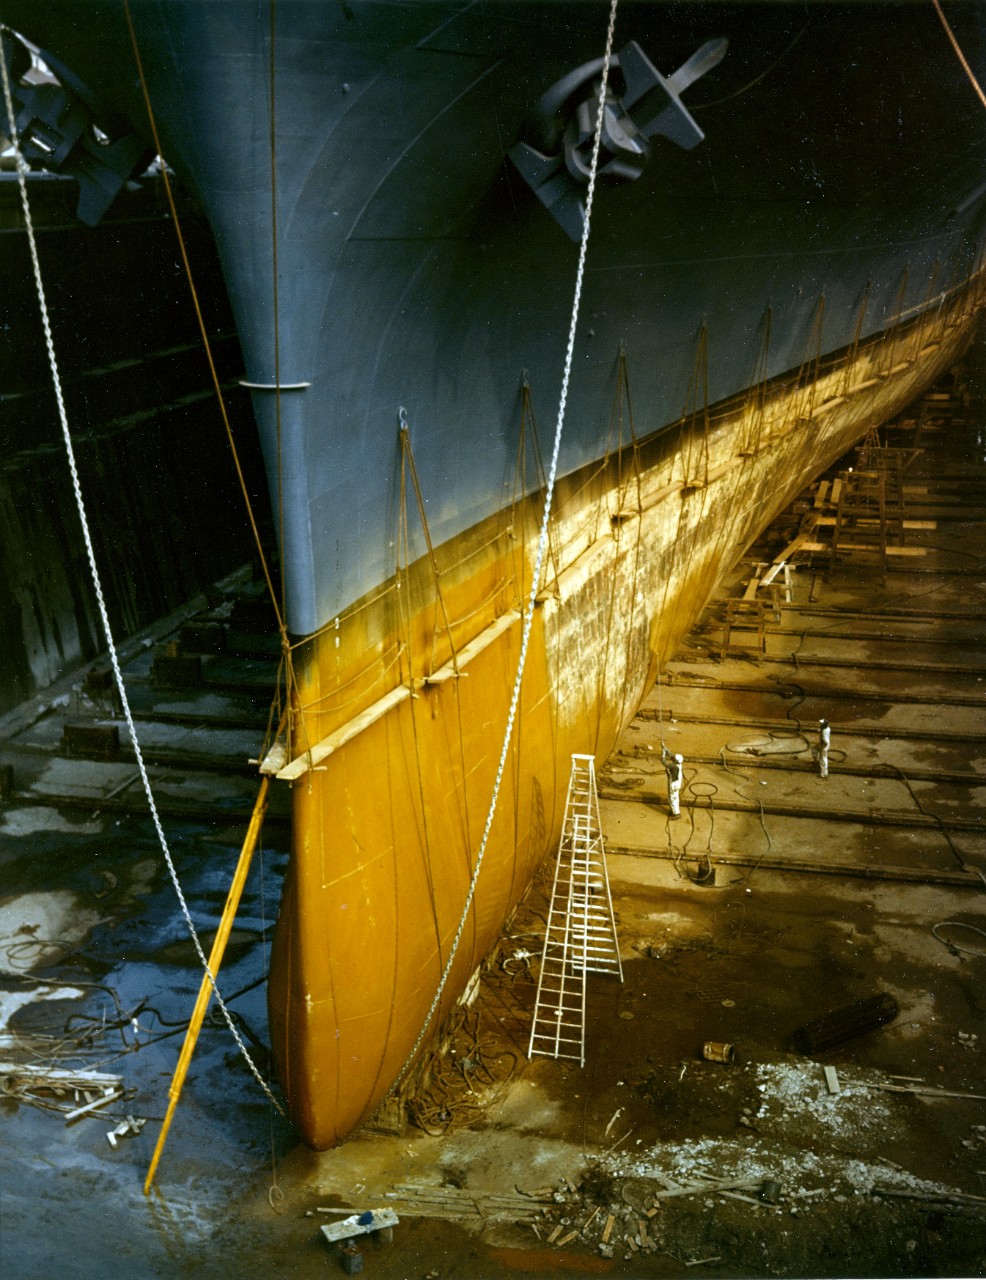 USS YORKTOWN -CV-10